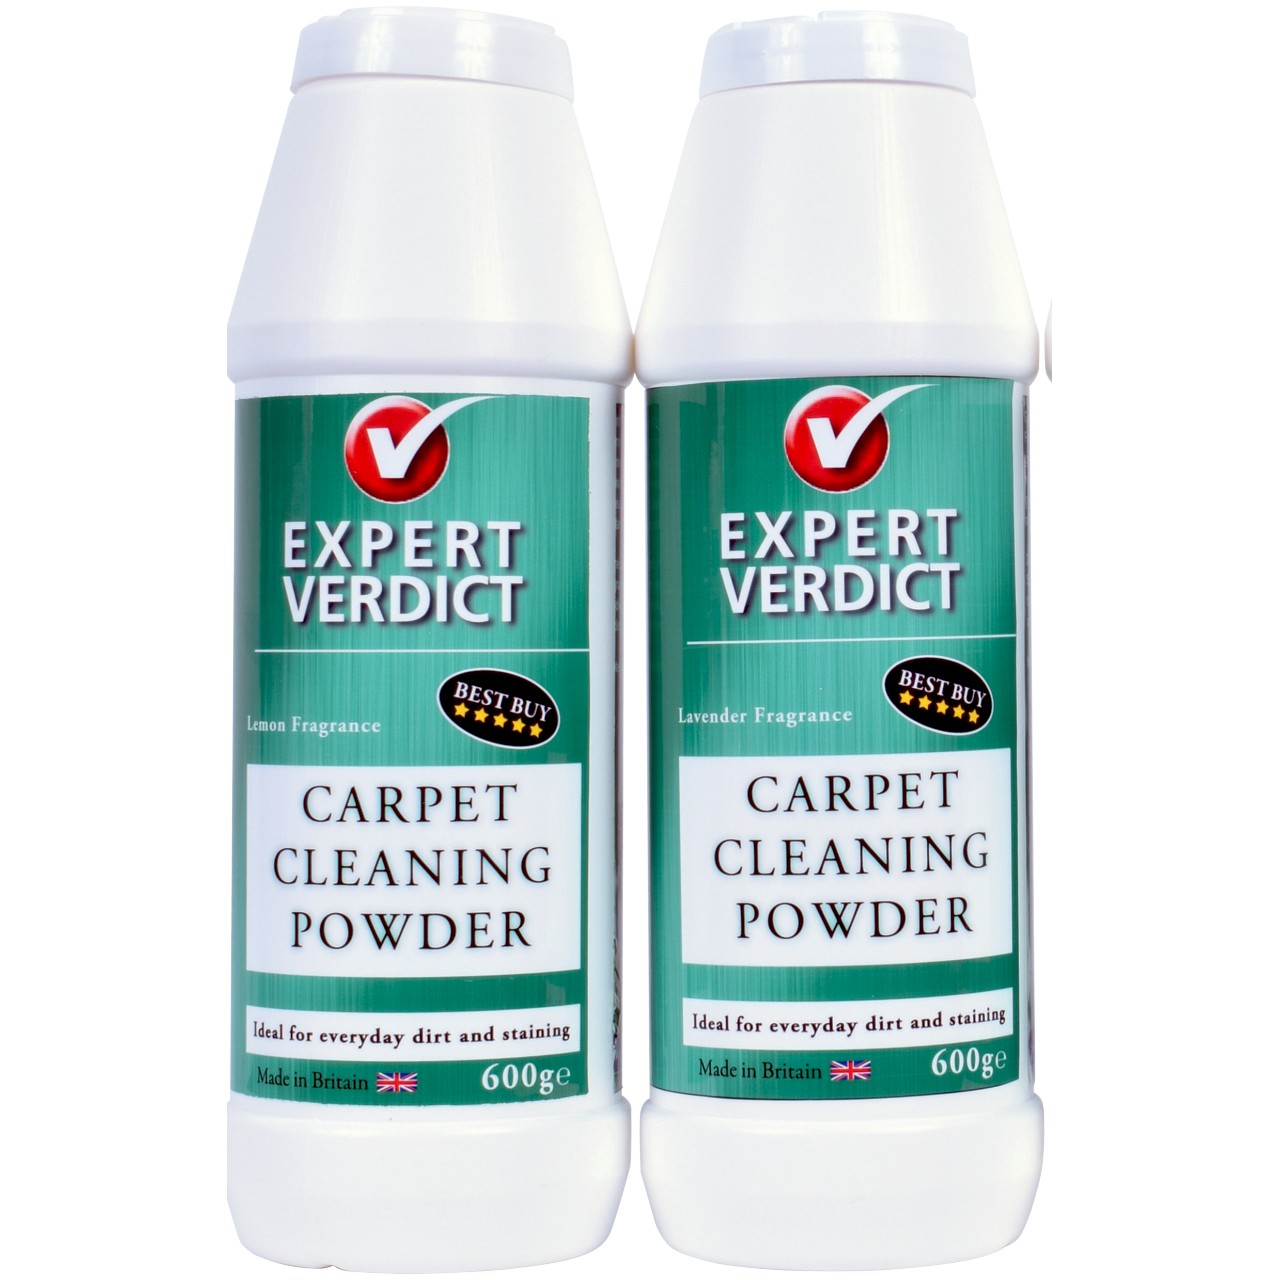 Dry Clean Carpet Powder - 2 x 600g packs